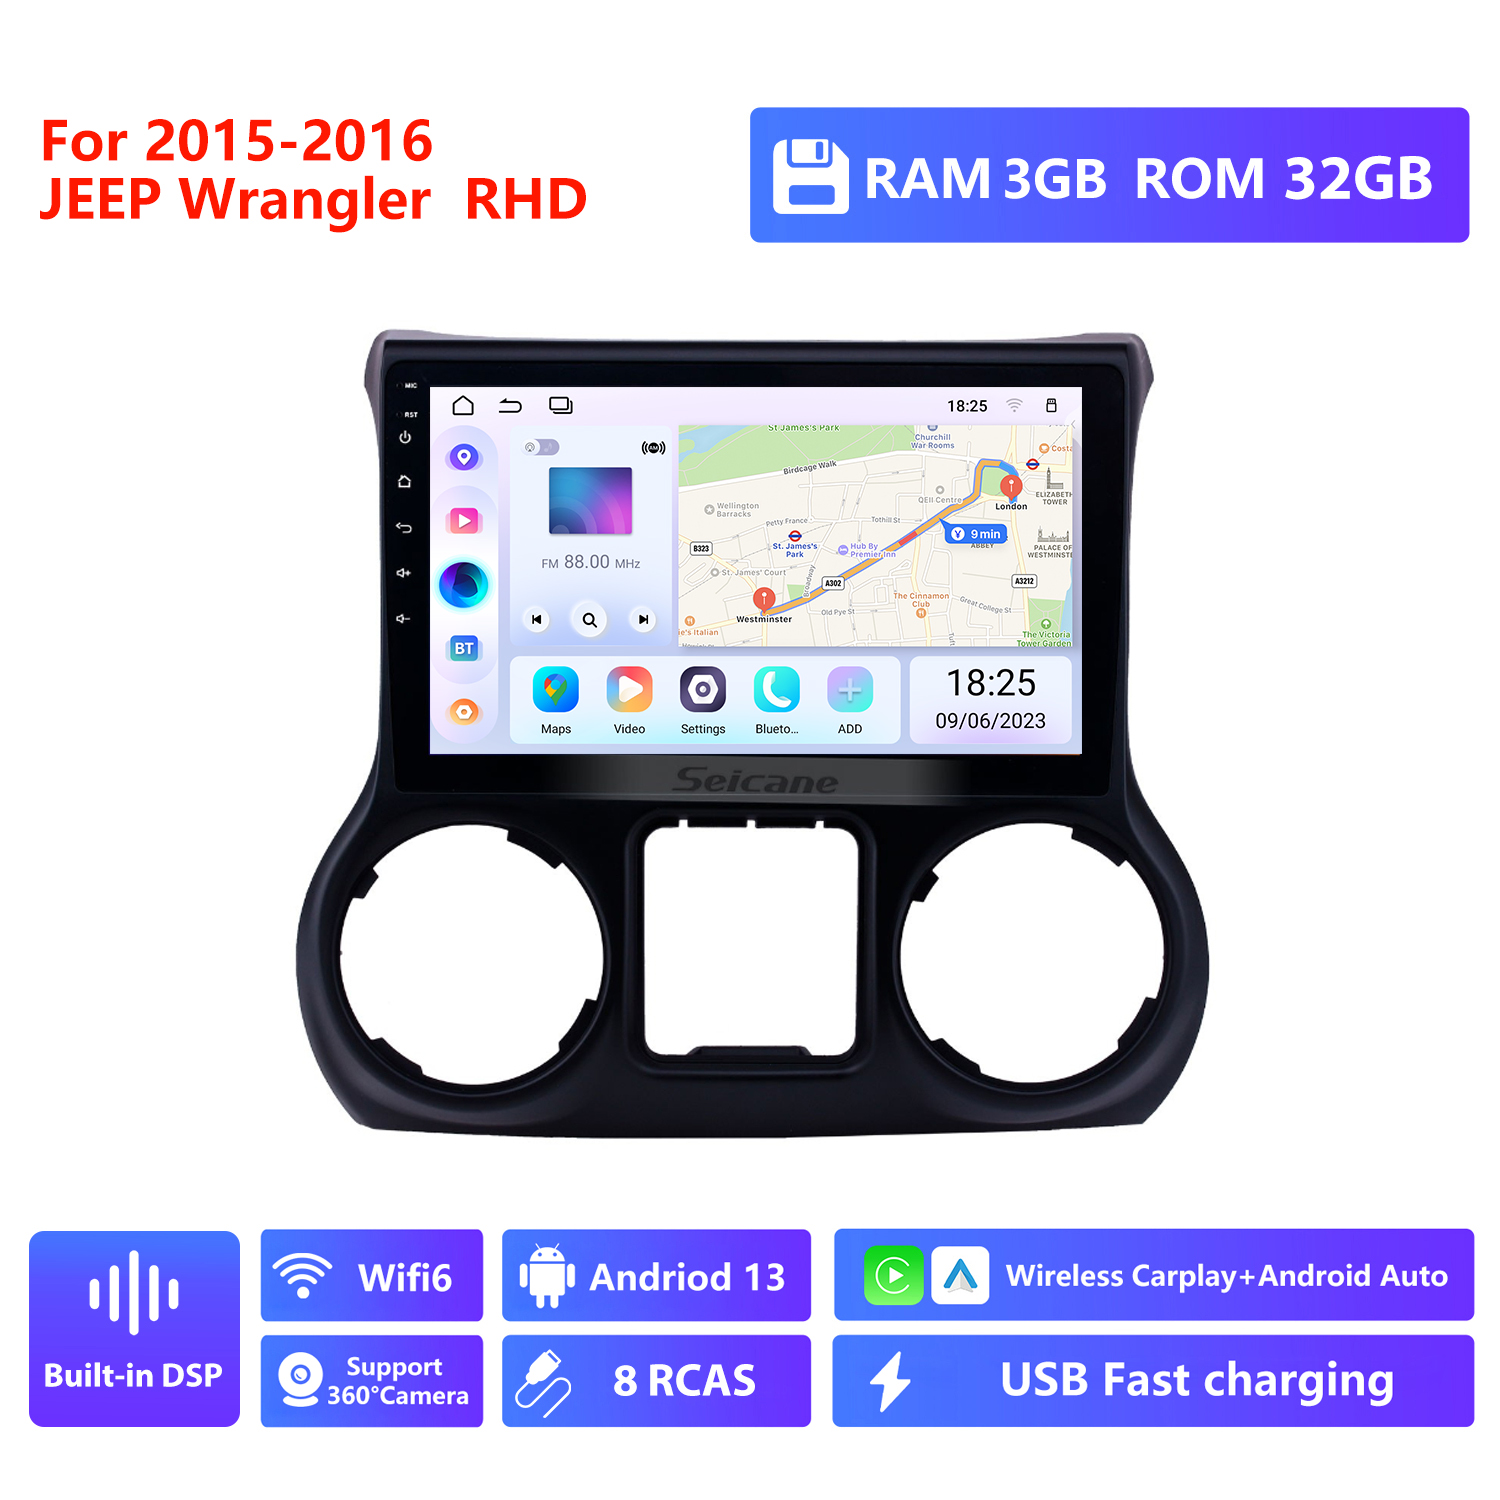 RAM 3G,ROM 32G,2015-2016,RHD